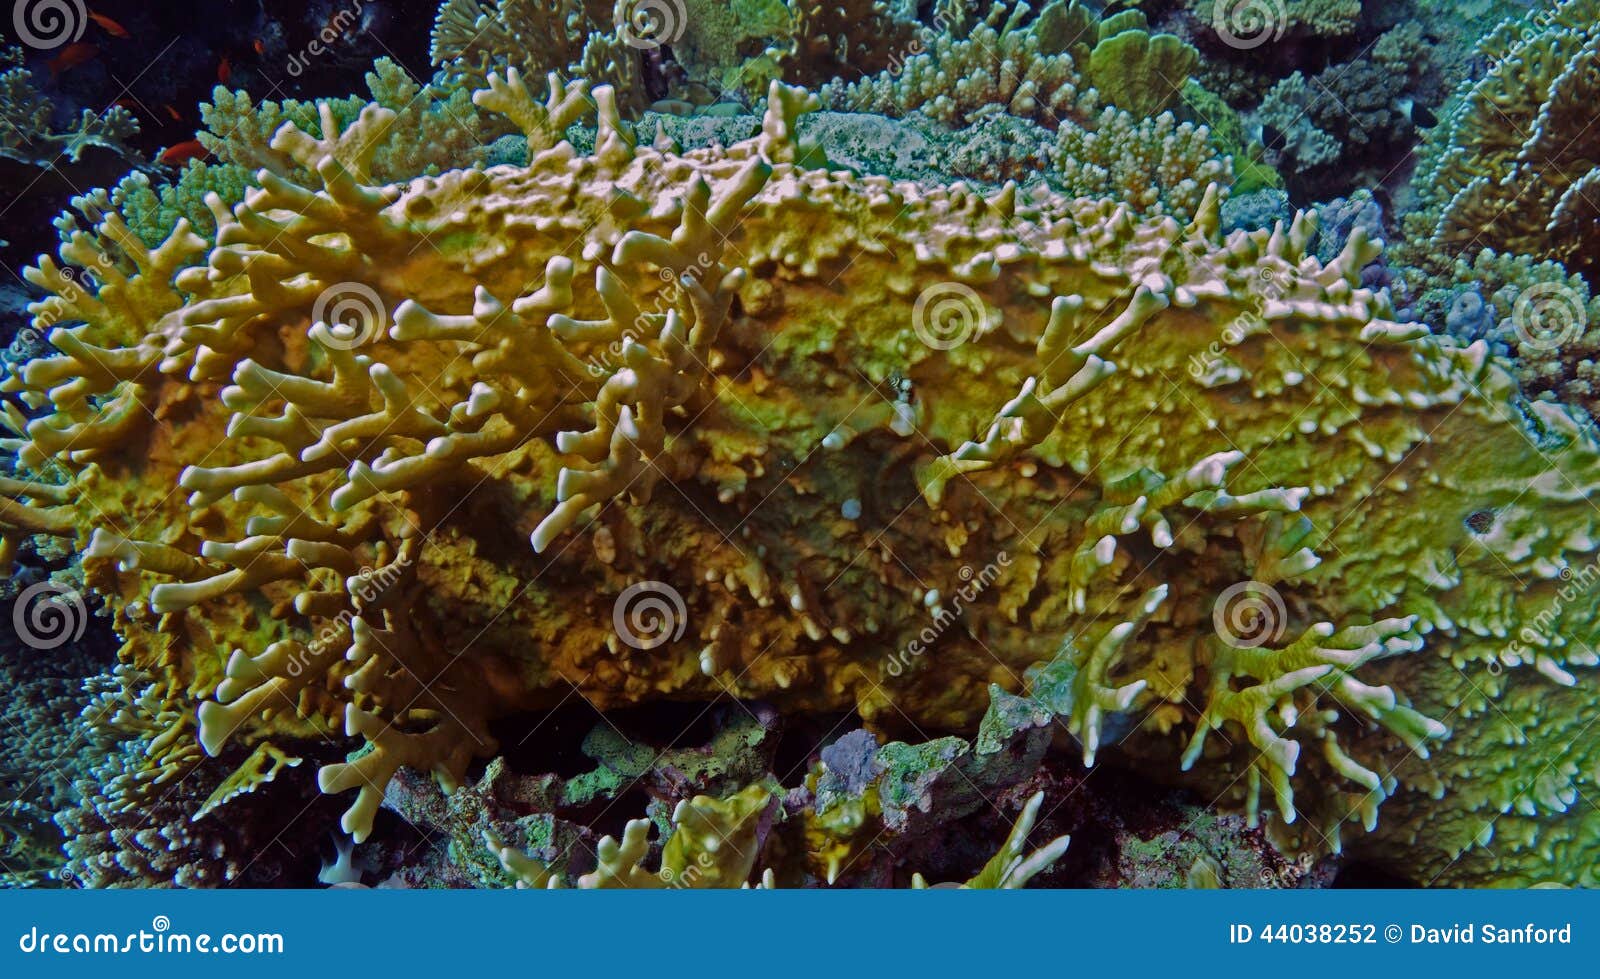 Millepora dichotoma stock photo. Image of blue, underwater - 44038252